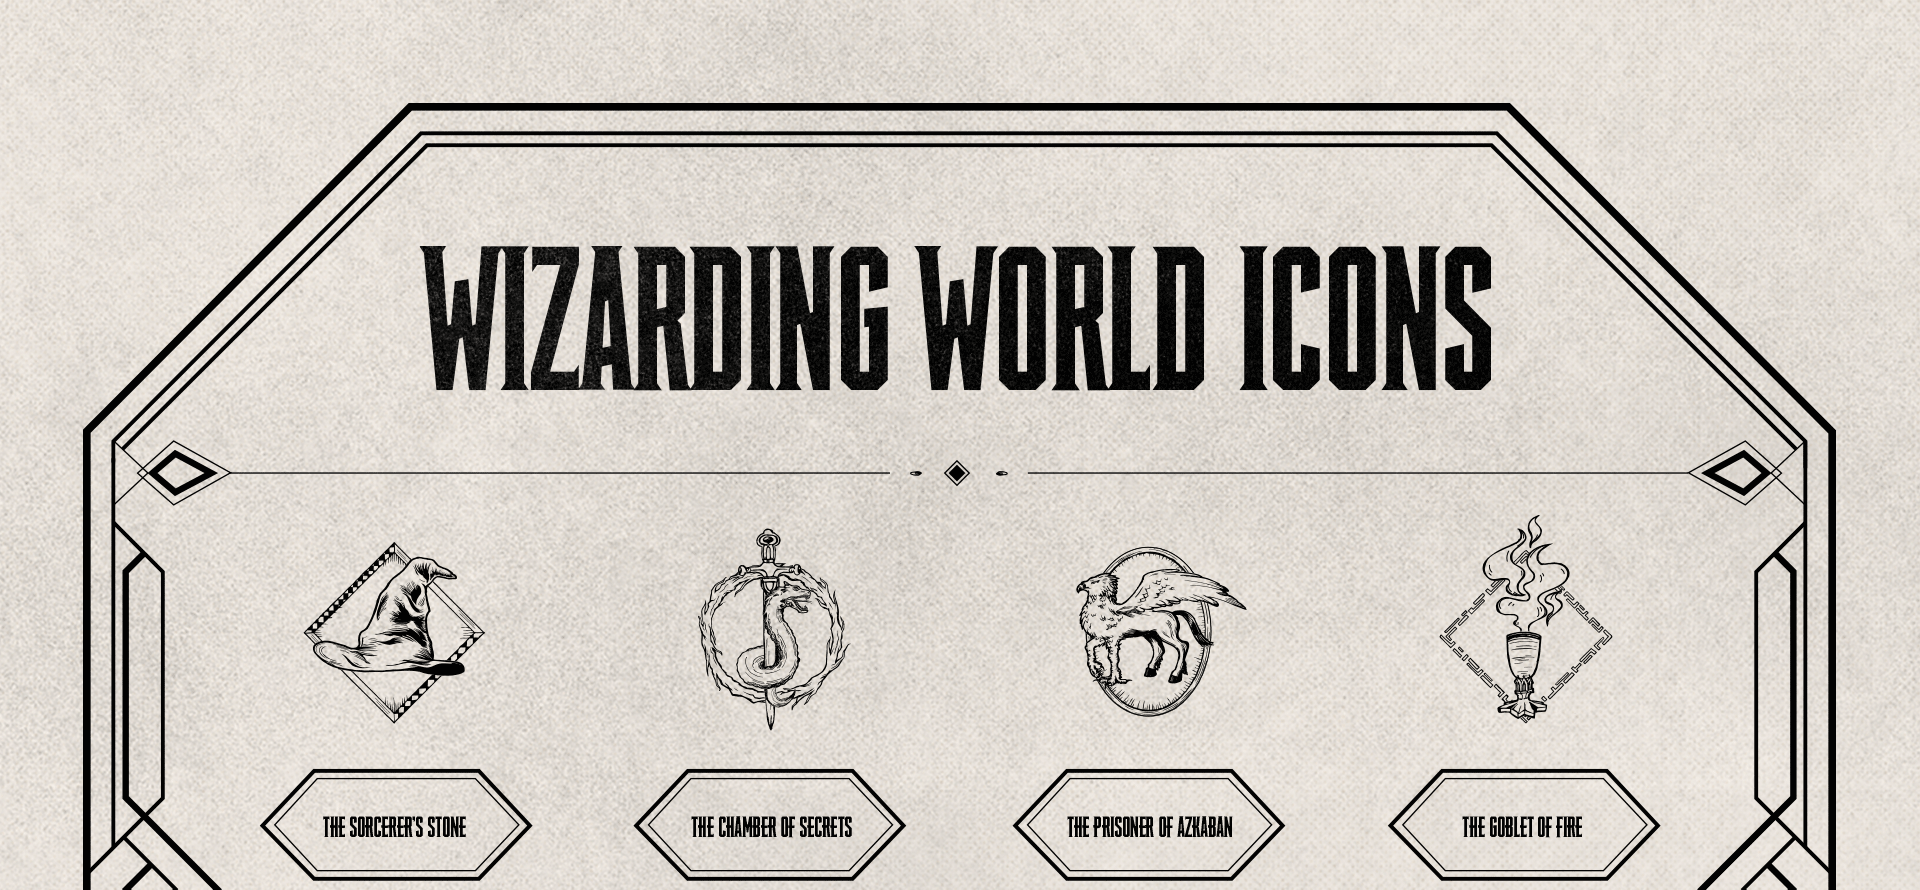 Wizarding World Logo - SYFY Wizarding World - loyalkaspar